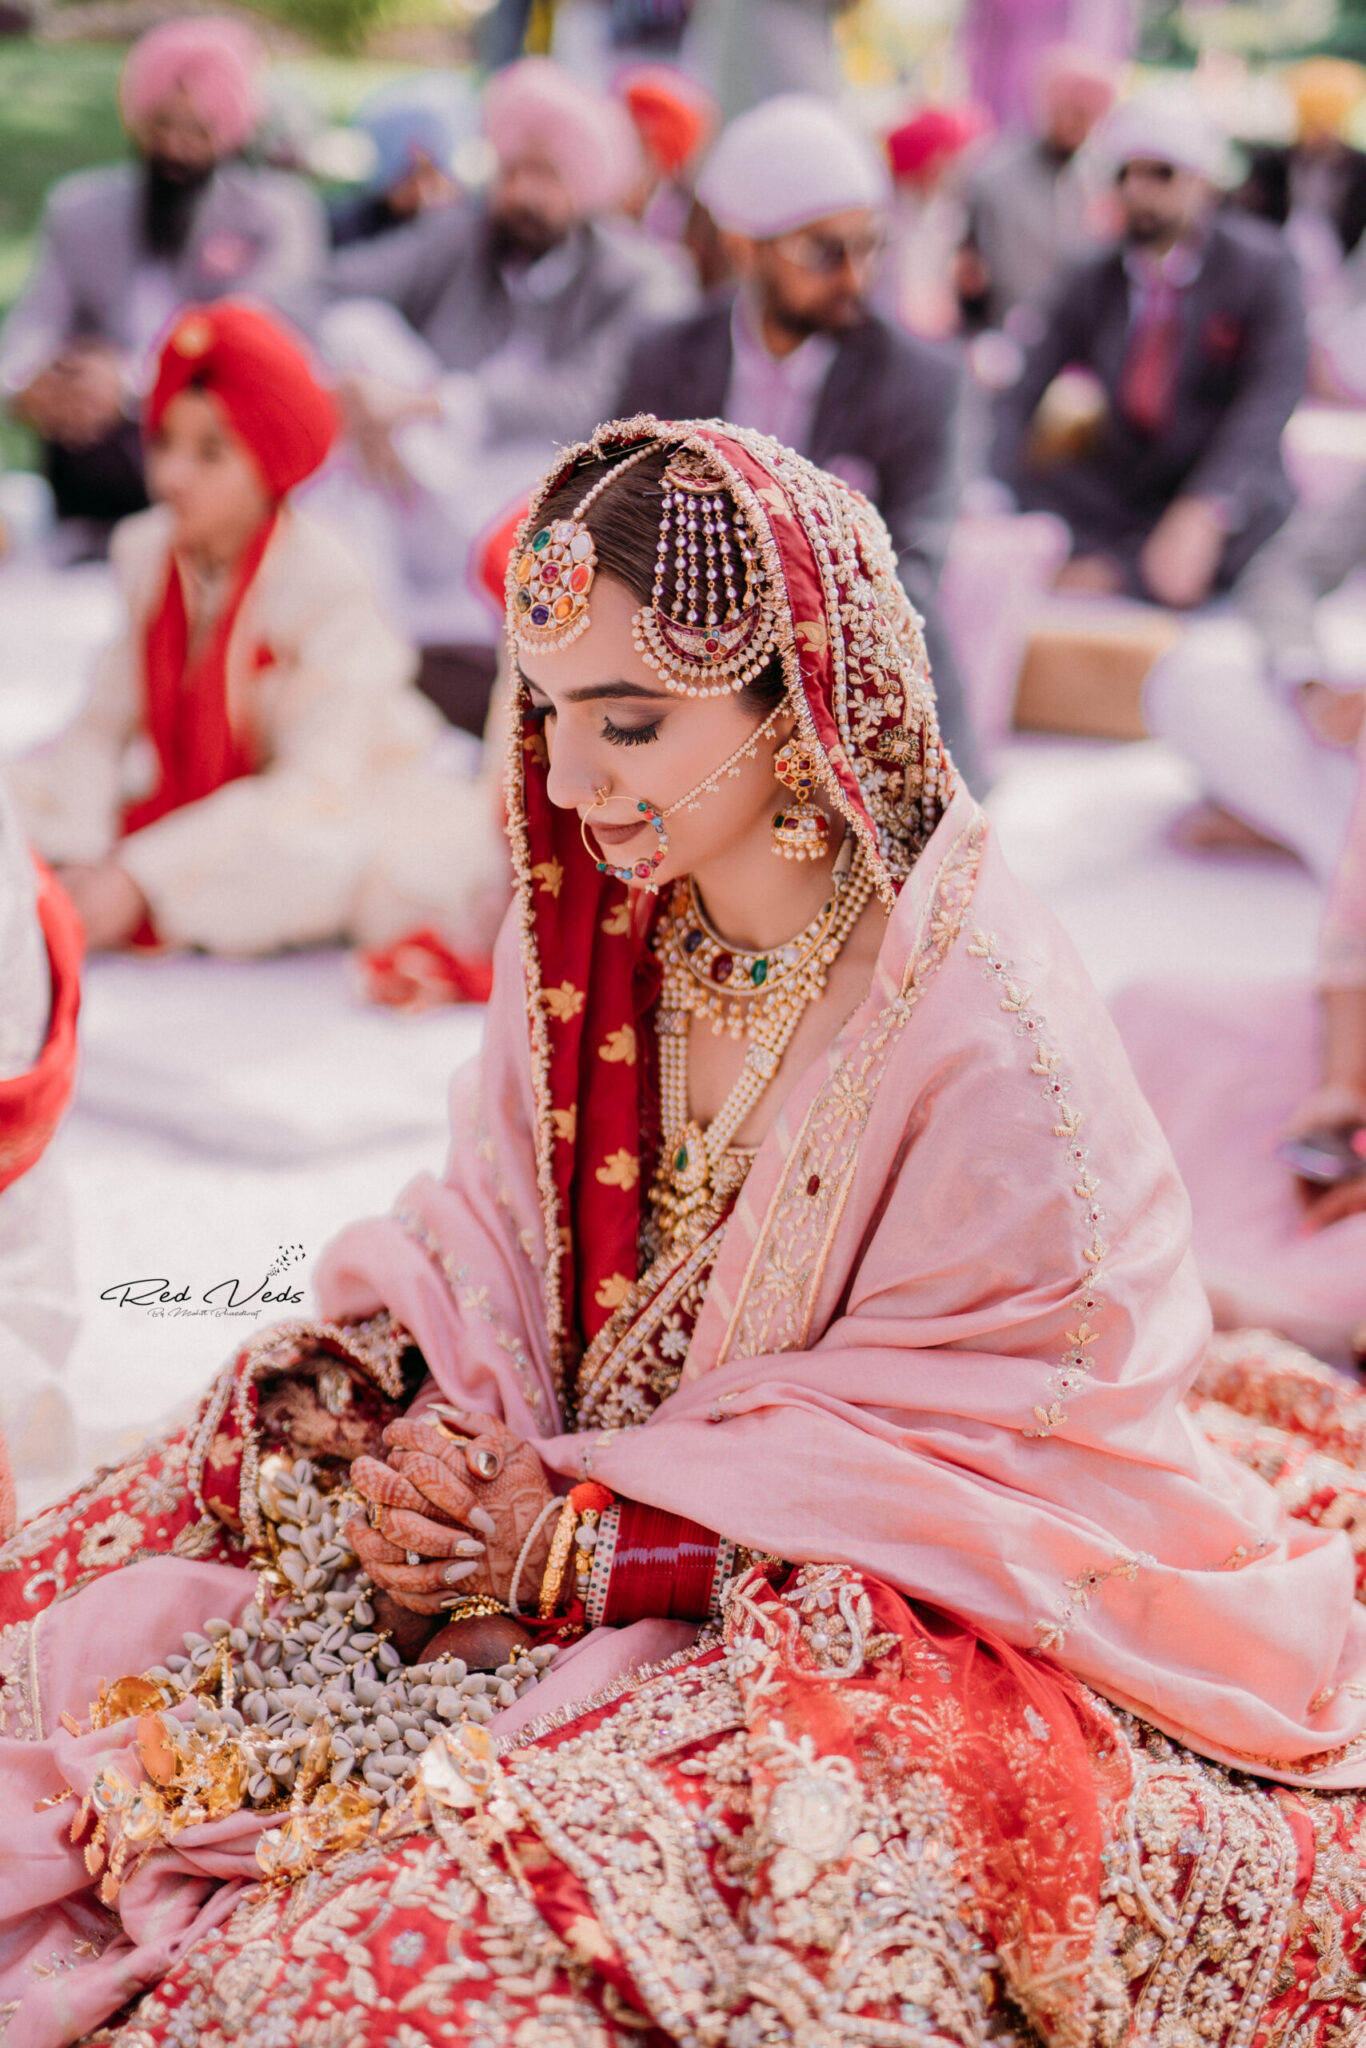 Indian bride Stock Photos, Royalty Free Indian bride Images | Depositphotos